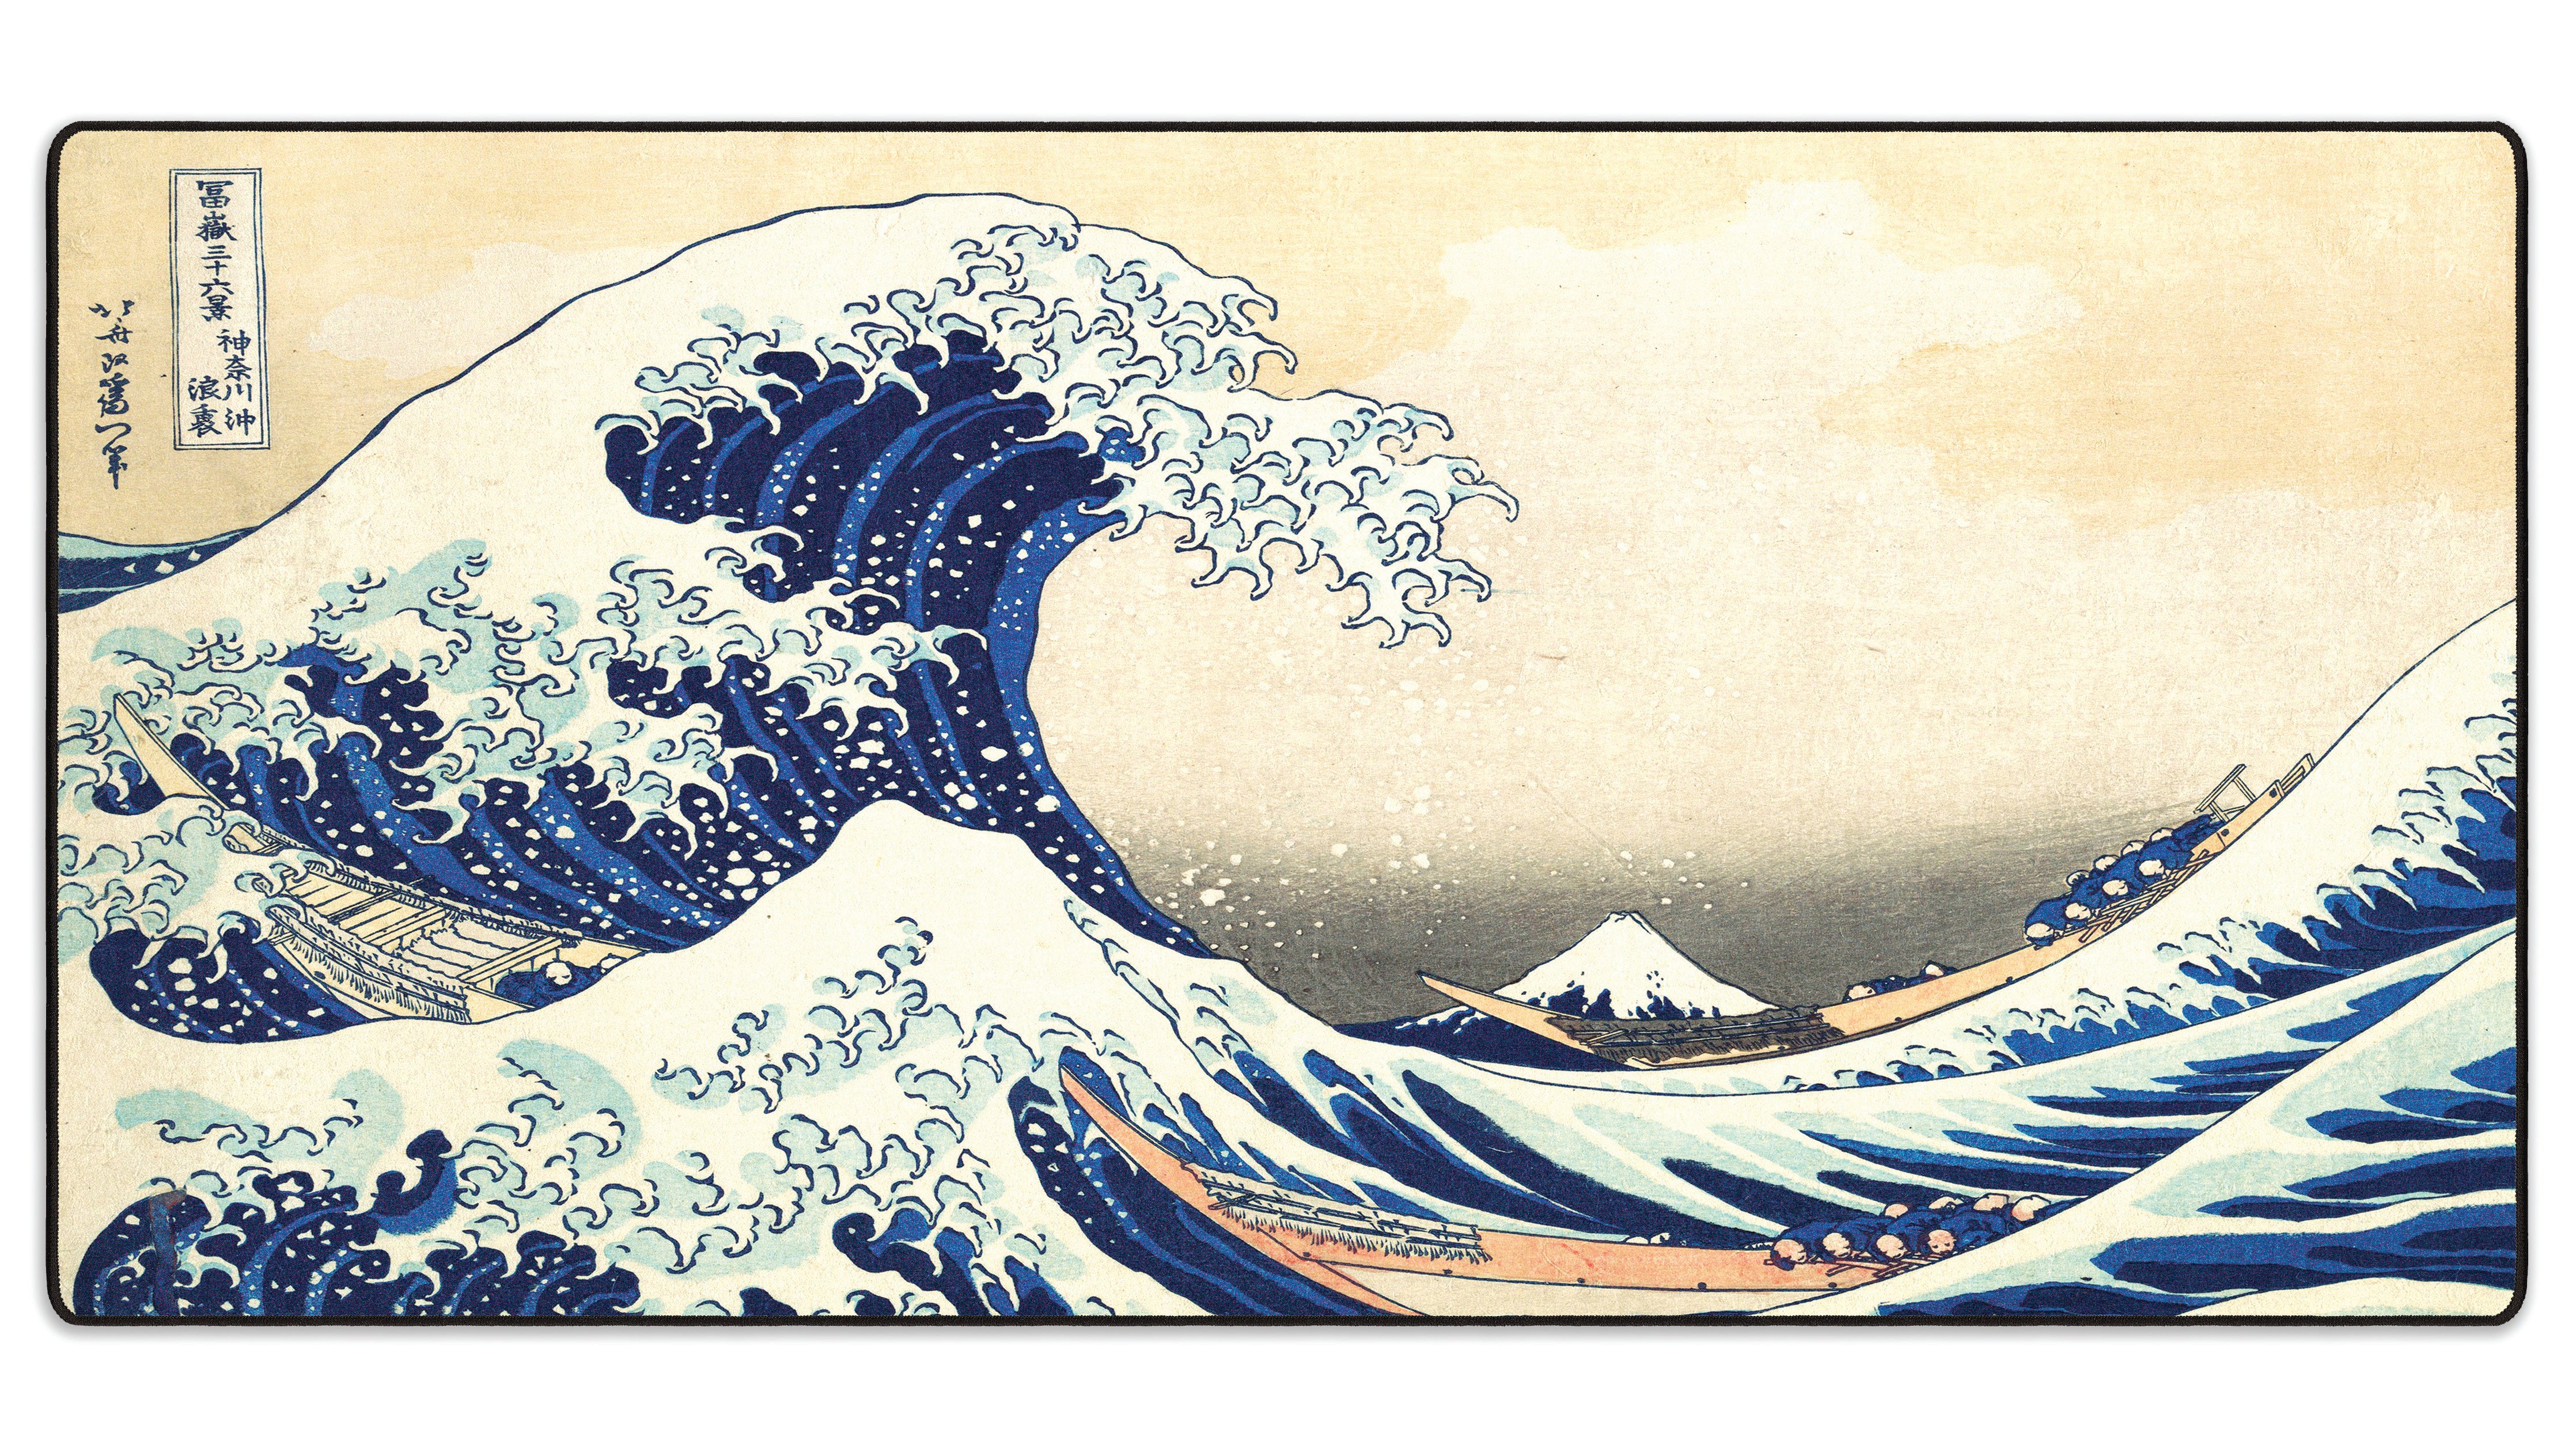 The Great Wave off Kanagawa, by Hokusai - The Mousepad Company